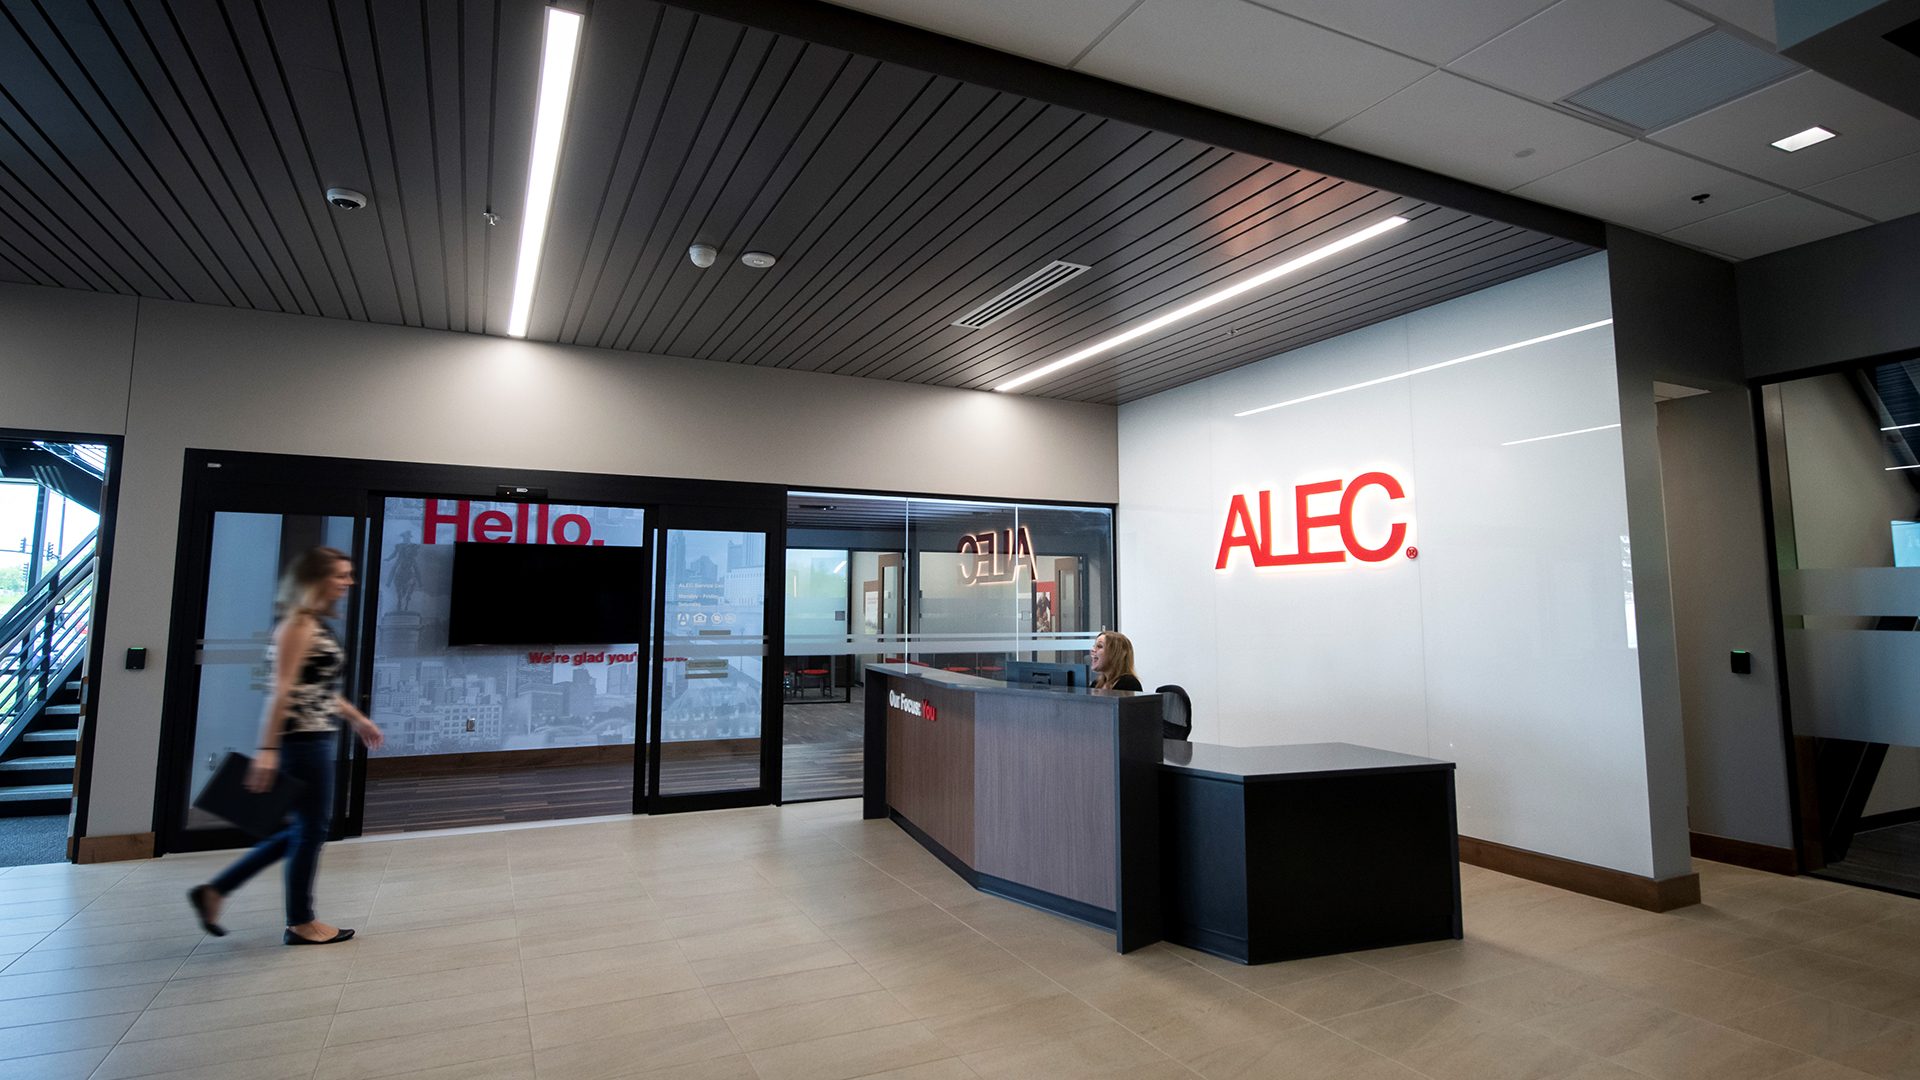 ALEC main lobby entrance with reception desk